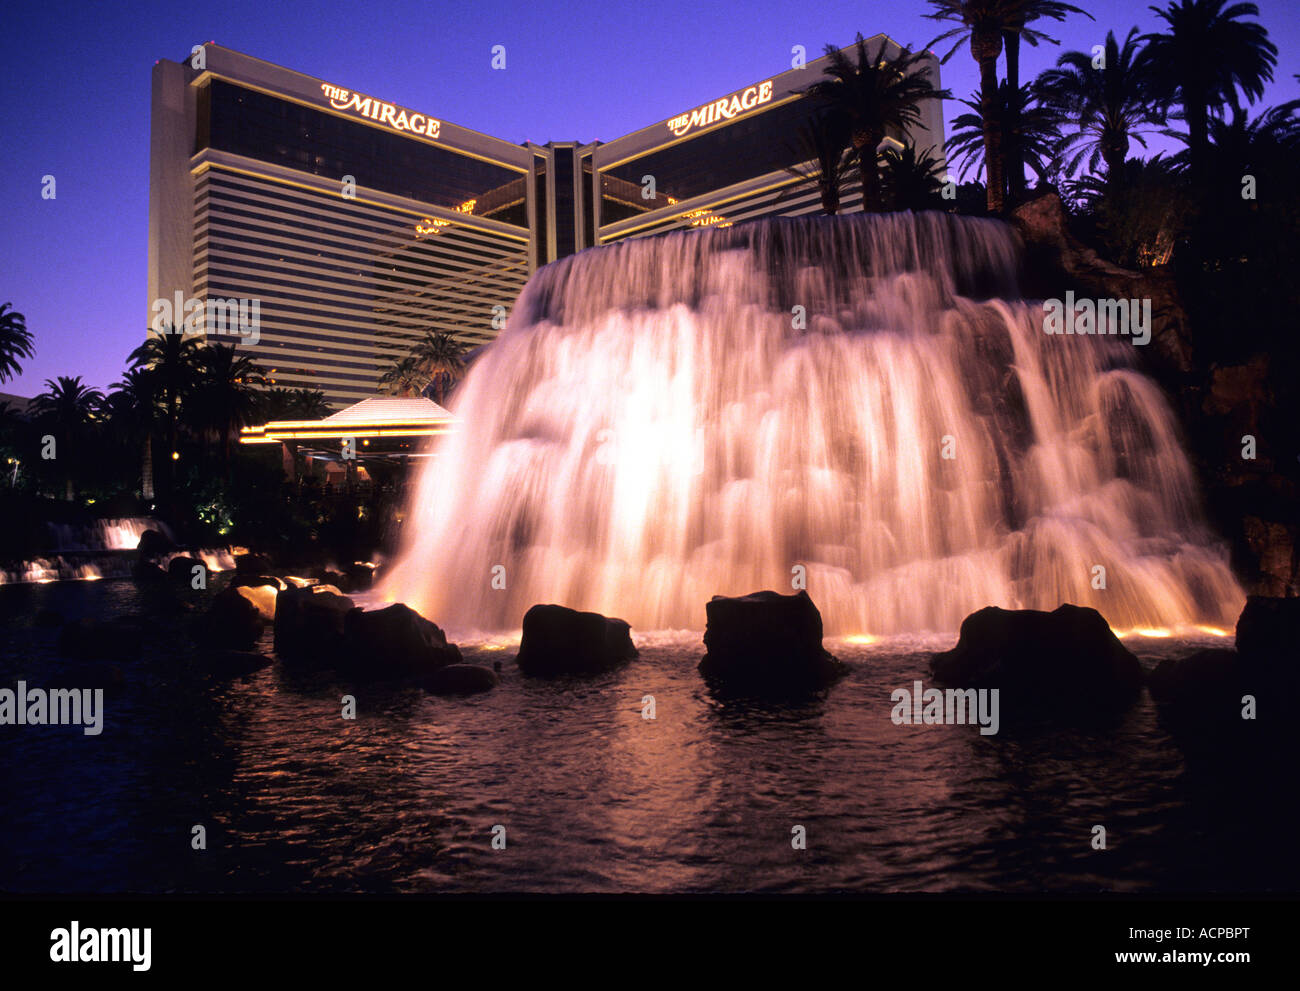 Das Mirage Hotel & Casino ausbrechenden Vulkan, in Las Vegas, Nevada USA Stockfoto